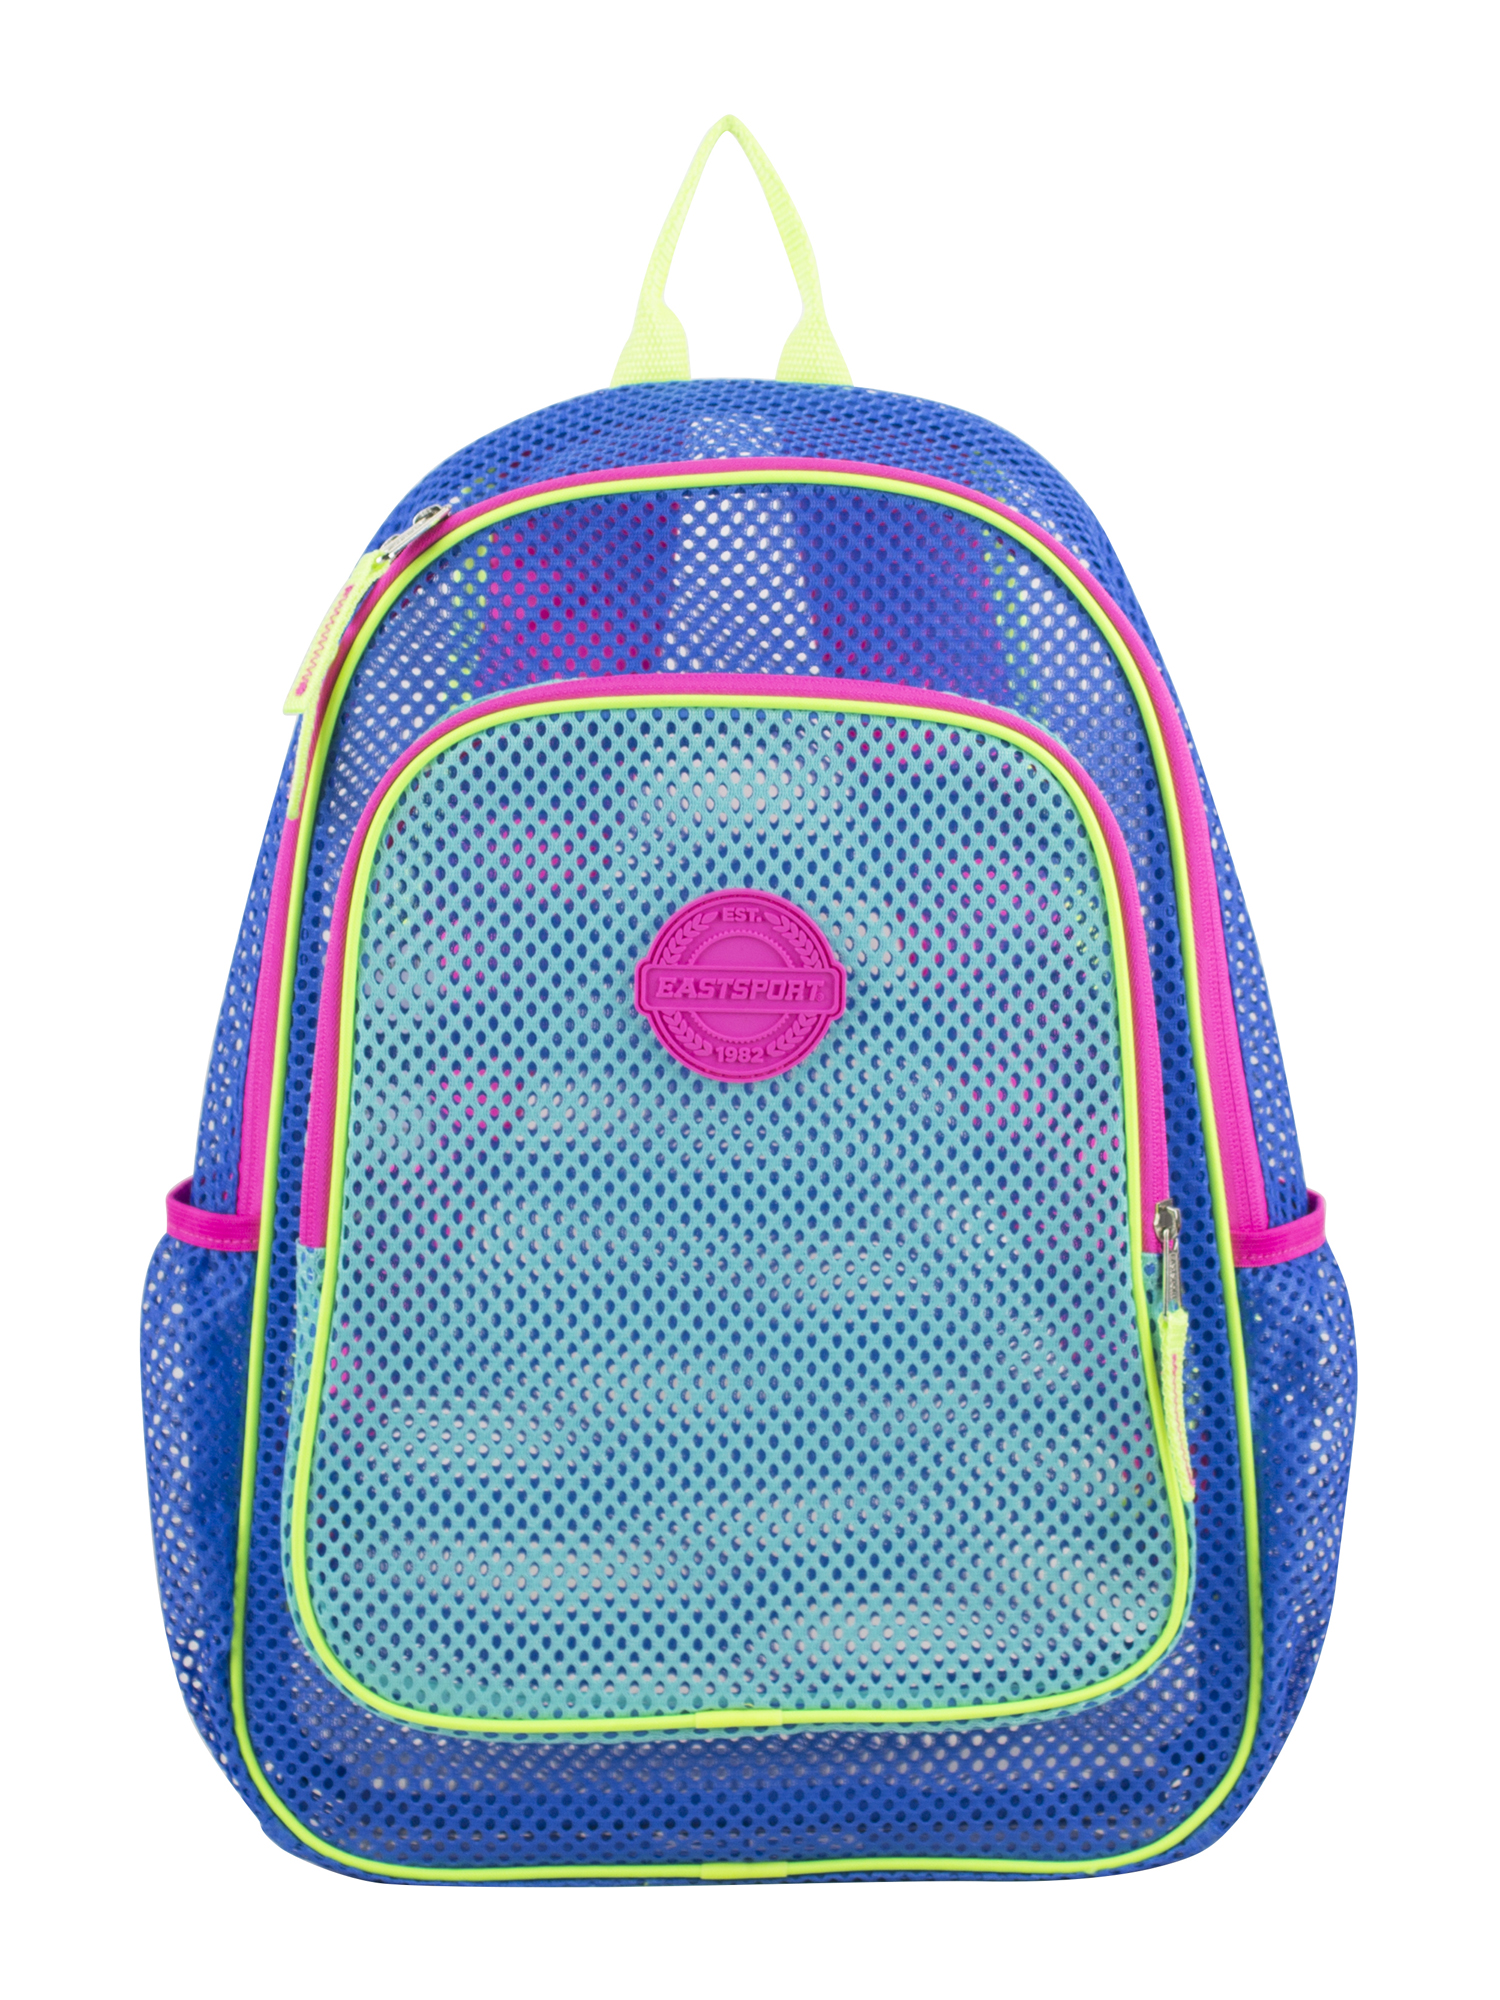 Eastsport Multi-Purpose Mesh Dynamic Blue Backpack with Adjustable Straps - image 3 of 6